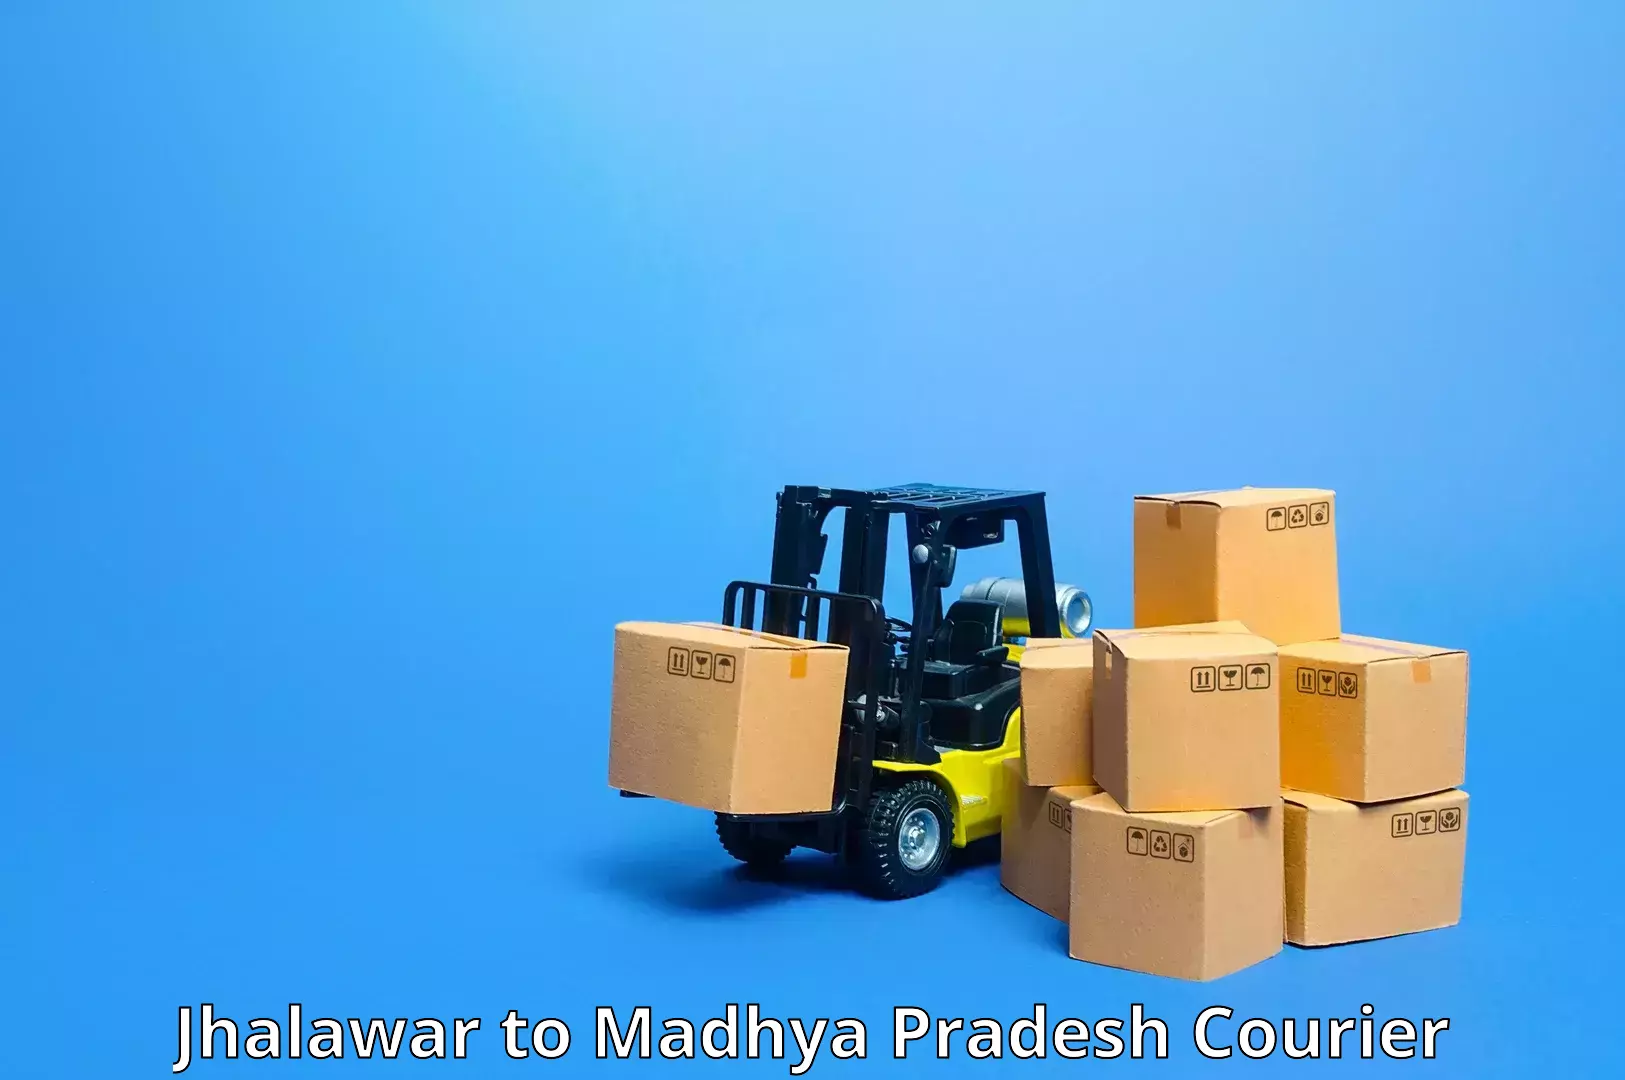 Flexible delivery scheduling Jhalawar to IIIT Bhopal